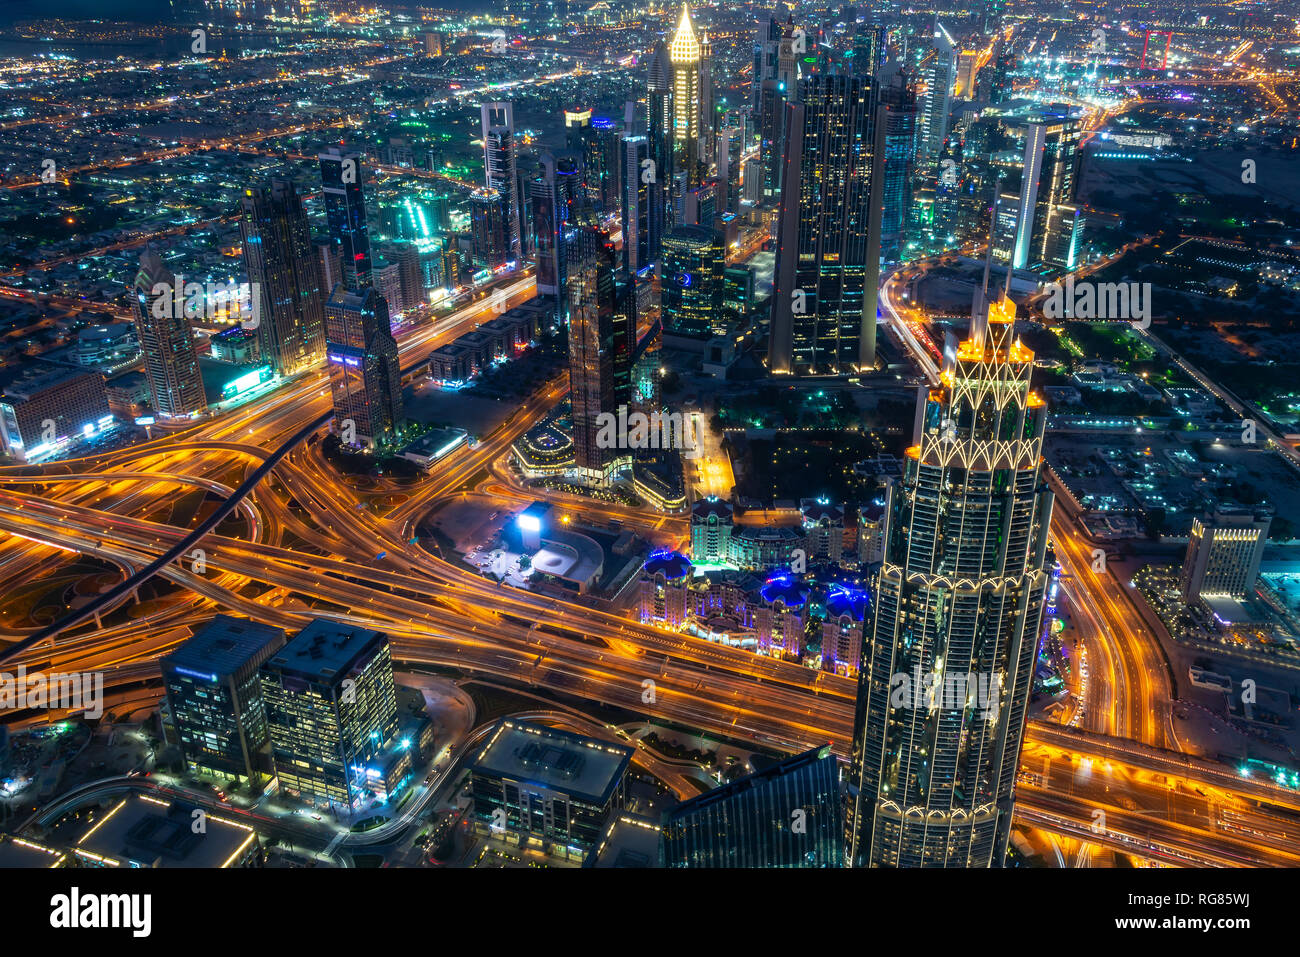 Aerial view of Dubai at night, United Arab Emirates Stock Photo